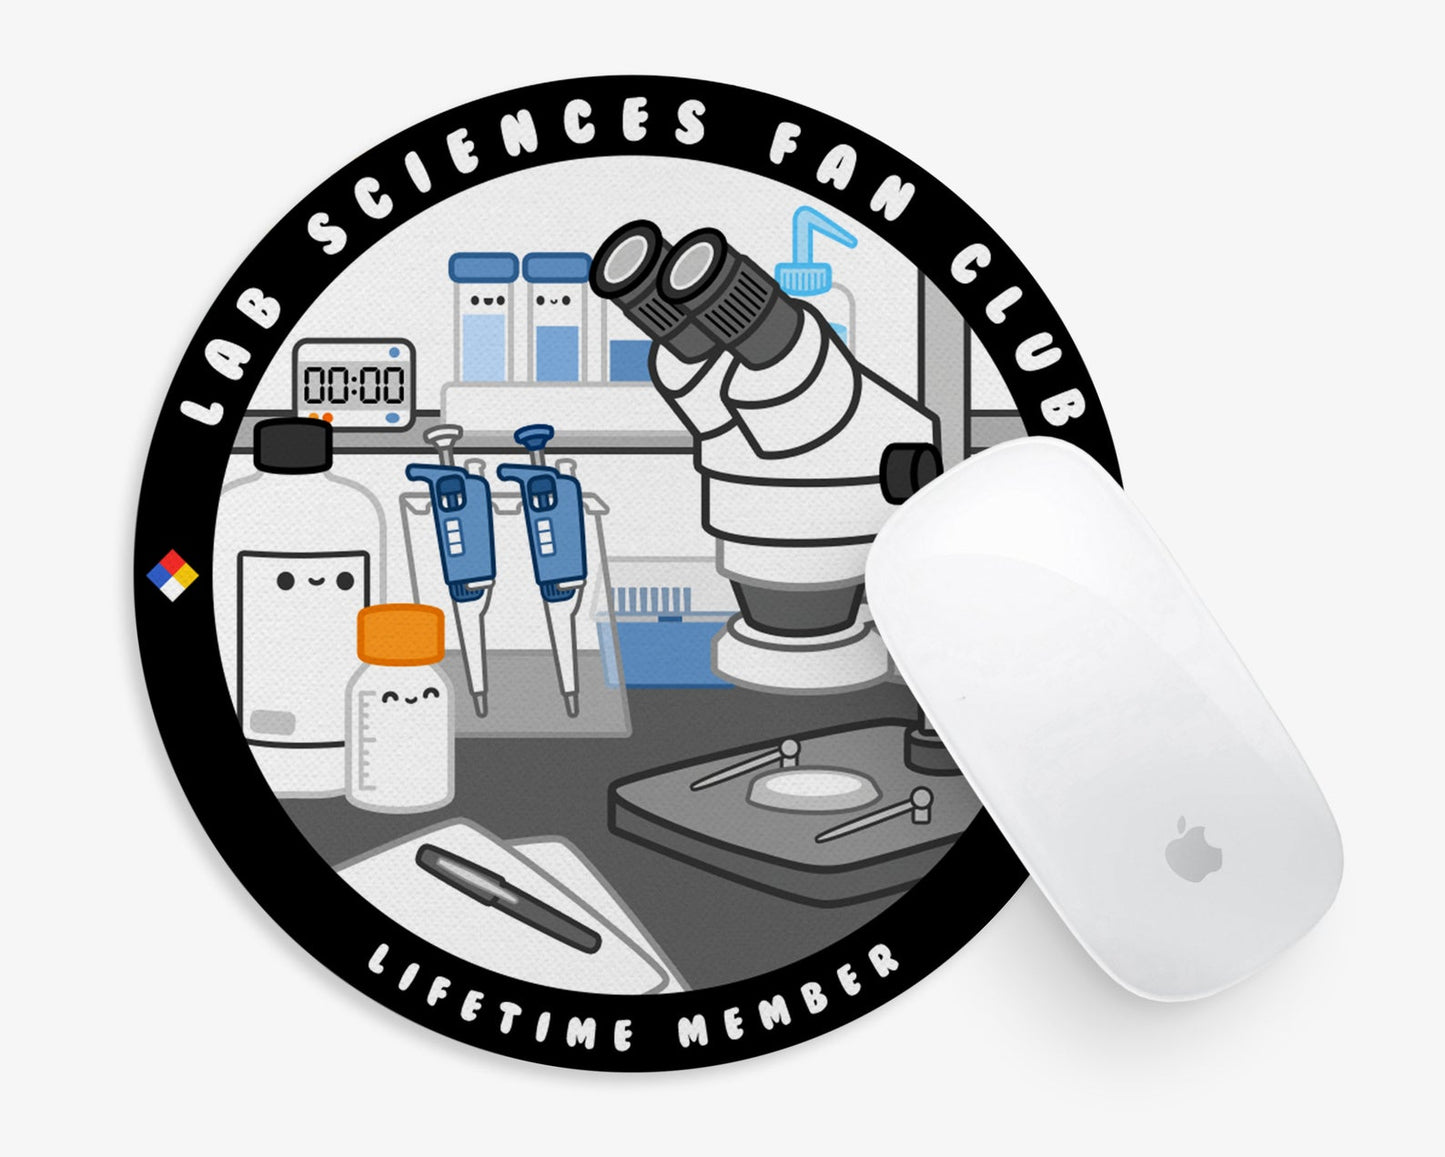 Laboratory Sciences Fan Club Mouse Pad